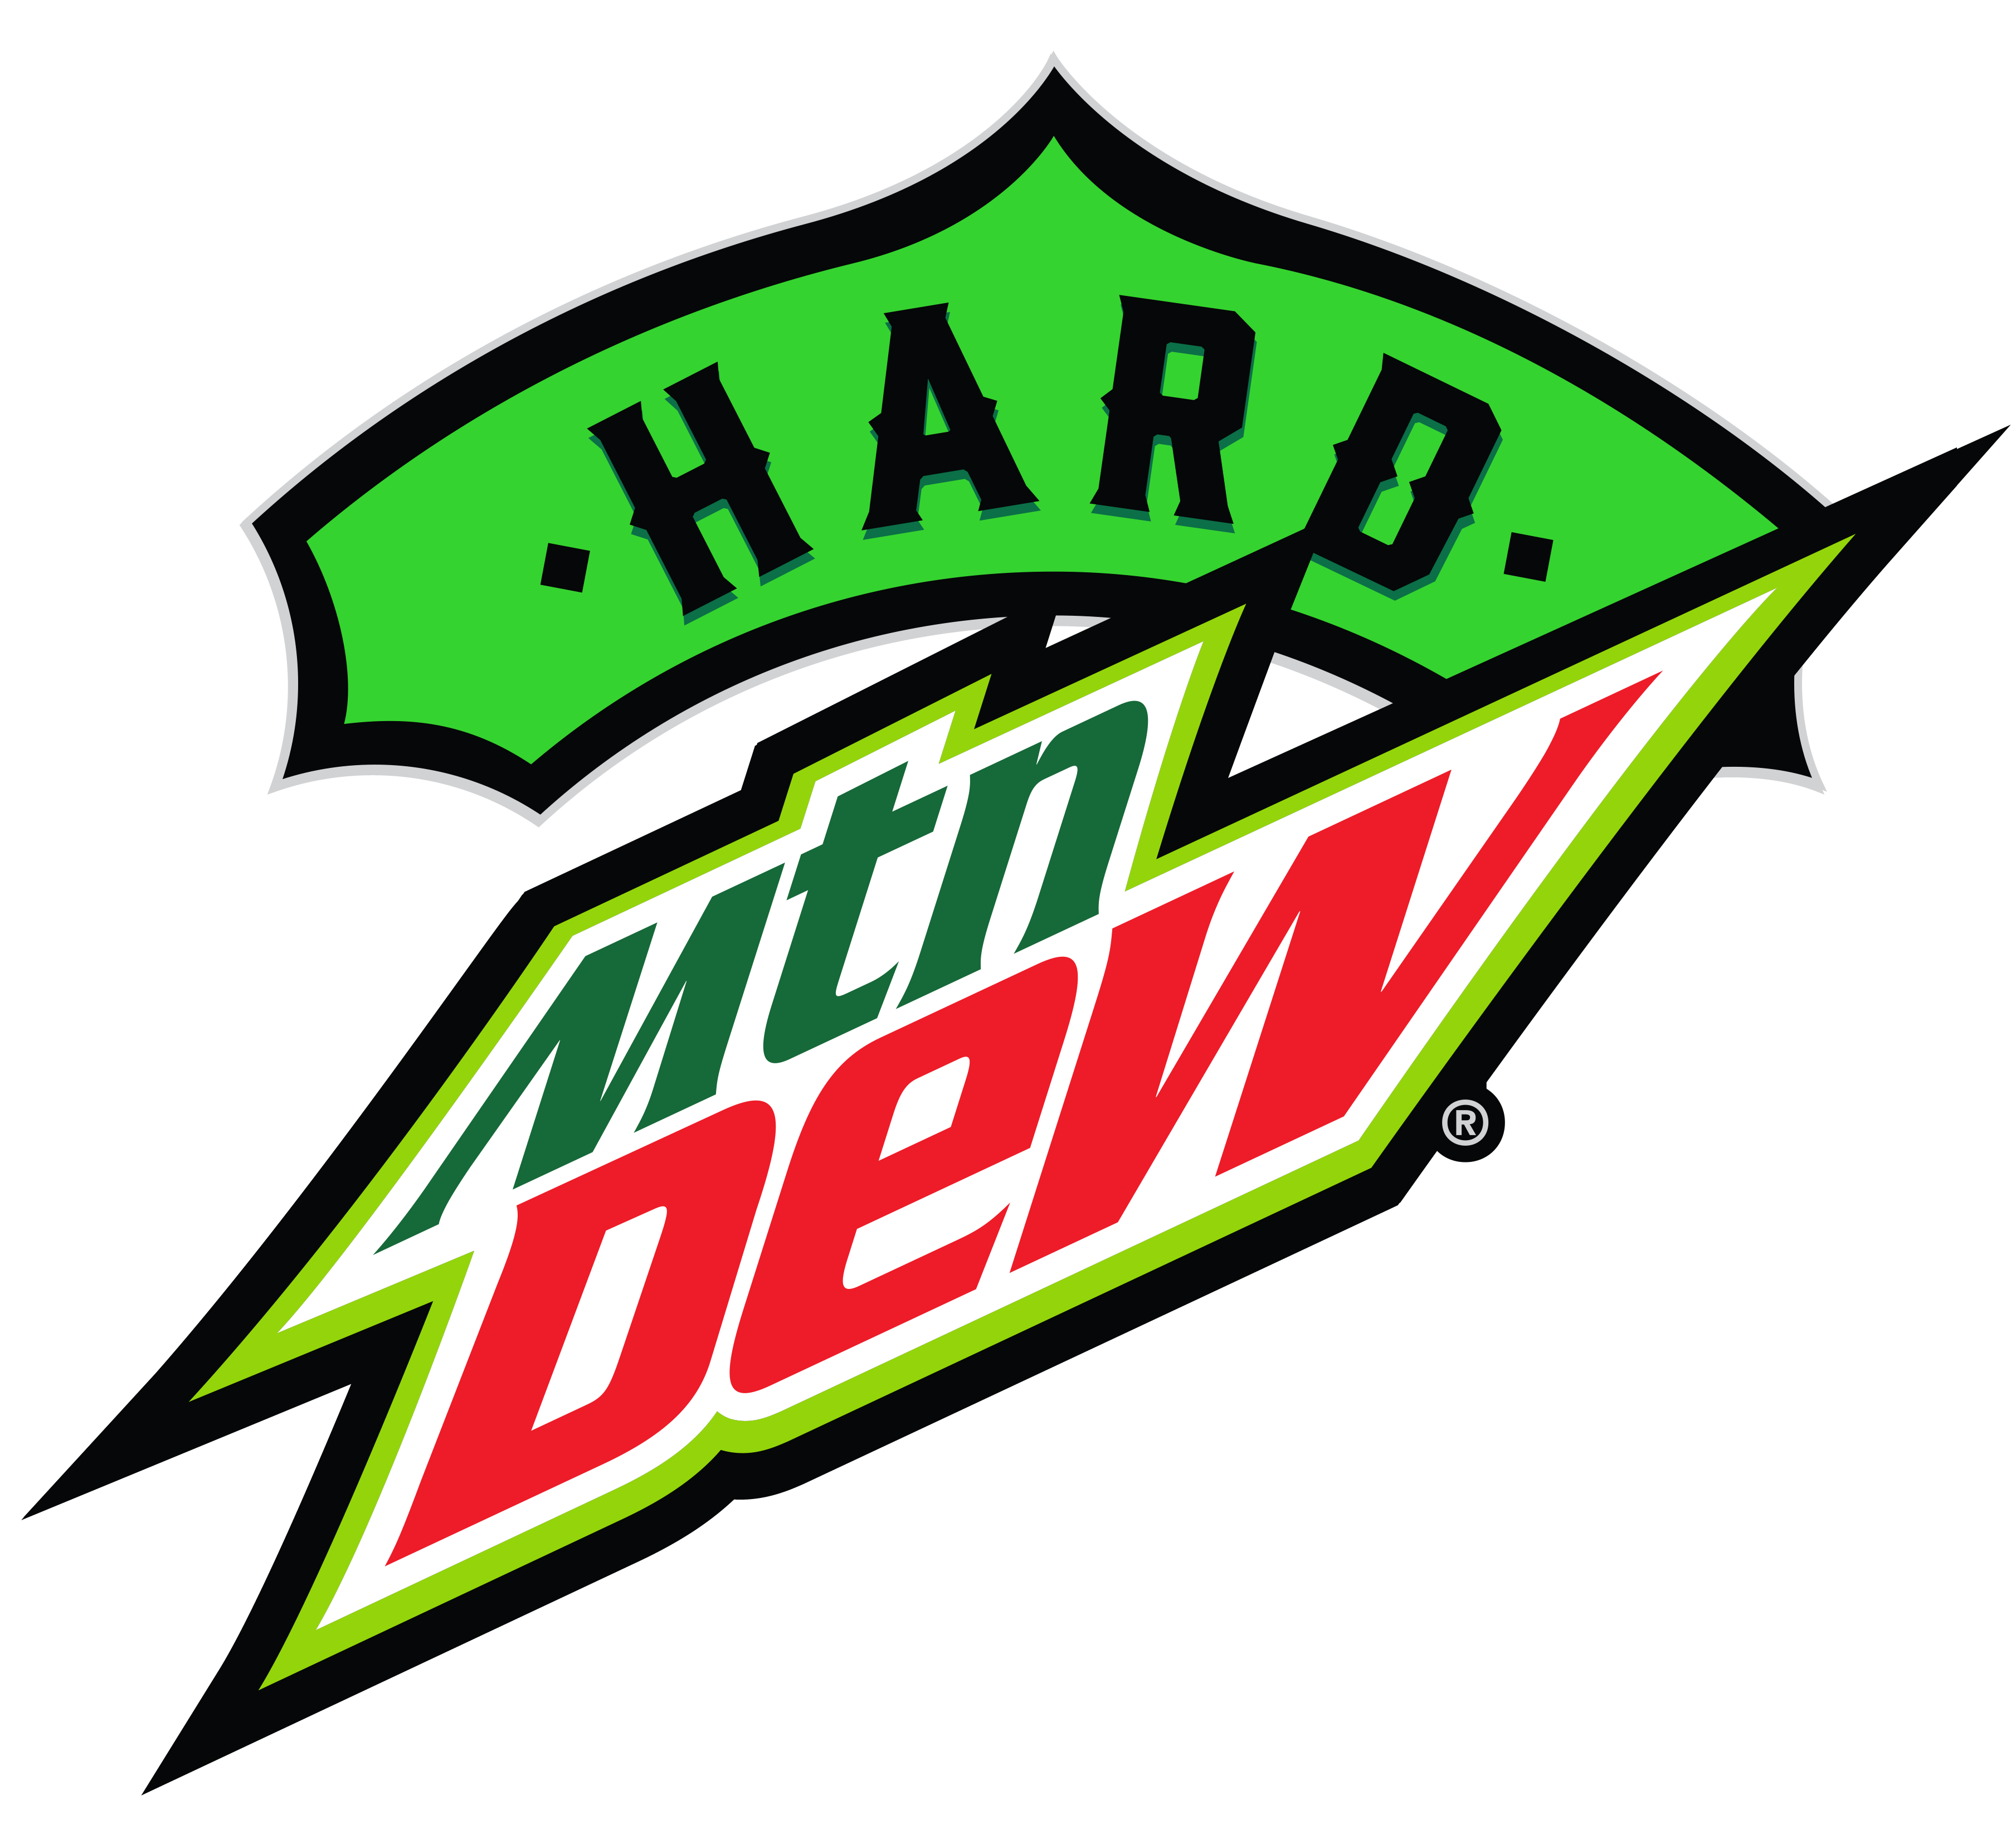 Hard Mountain Dew